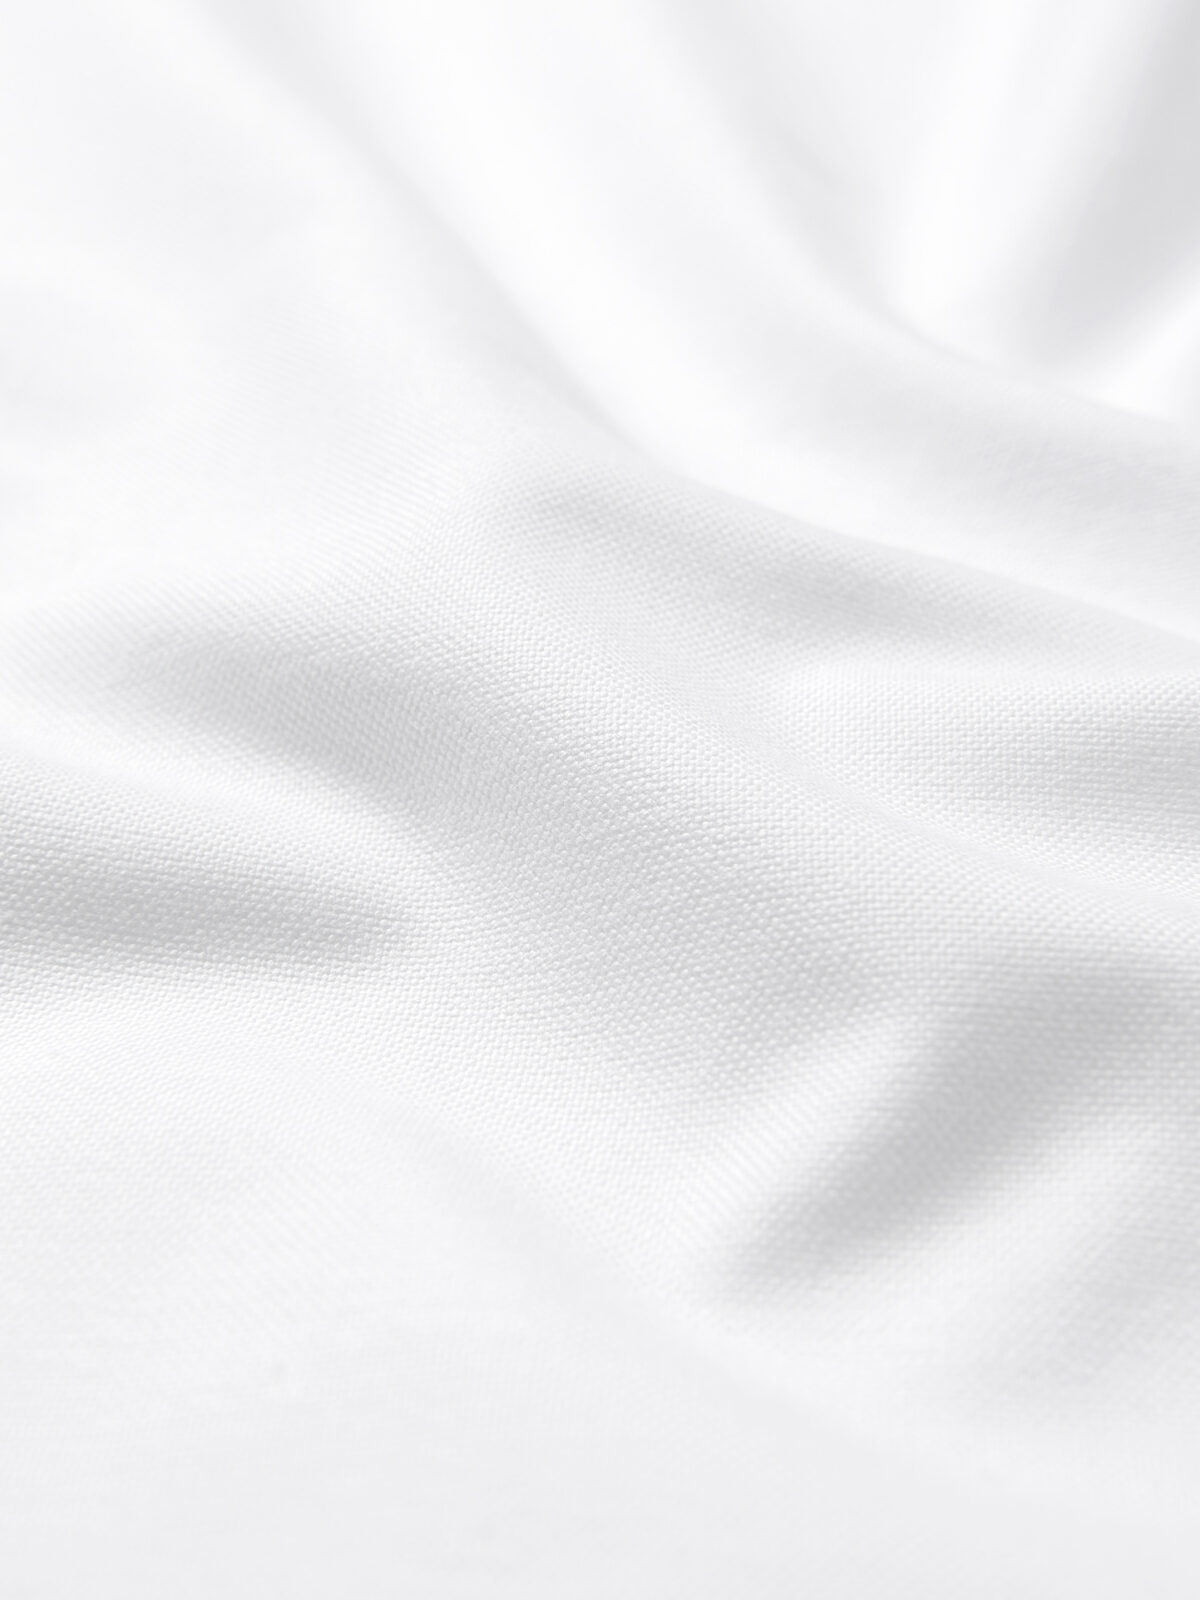 American Pima White Oxford Cloth Shirts by Proper Cloth